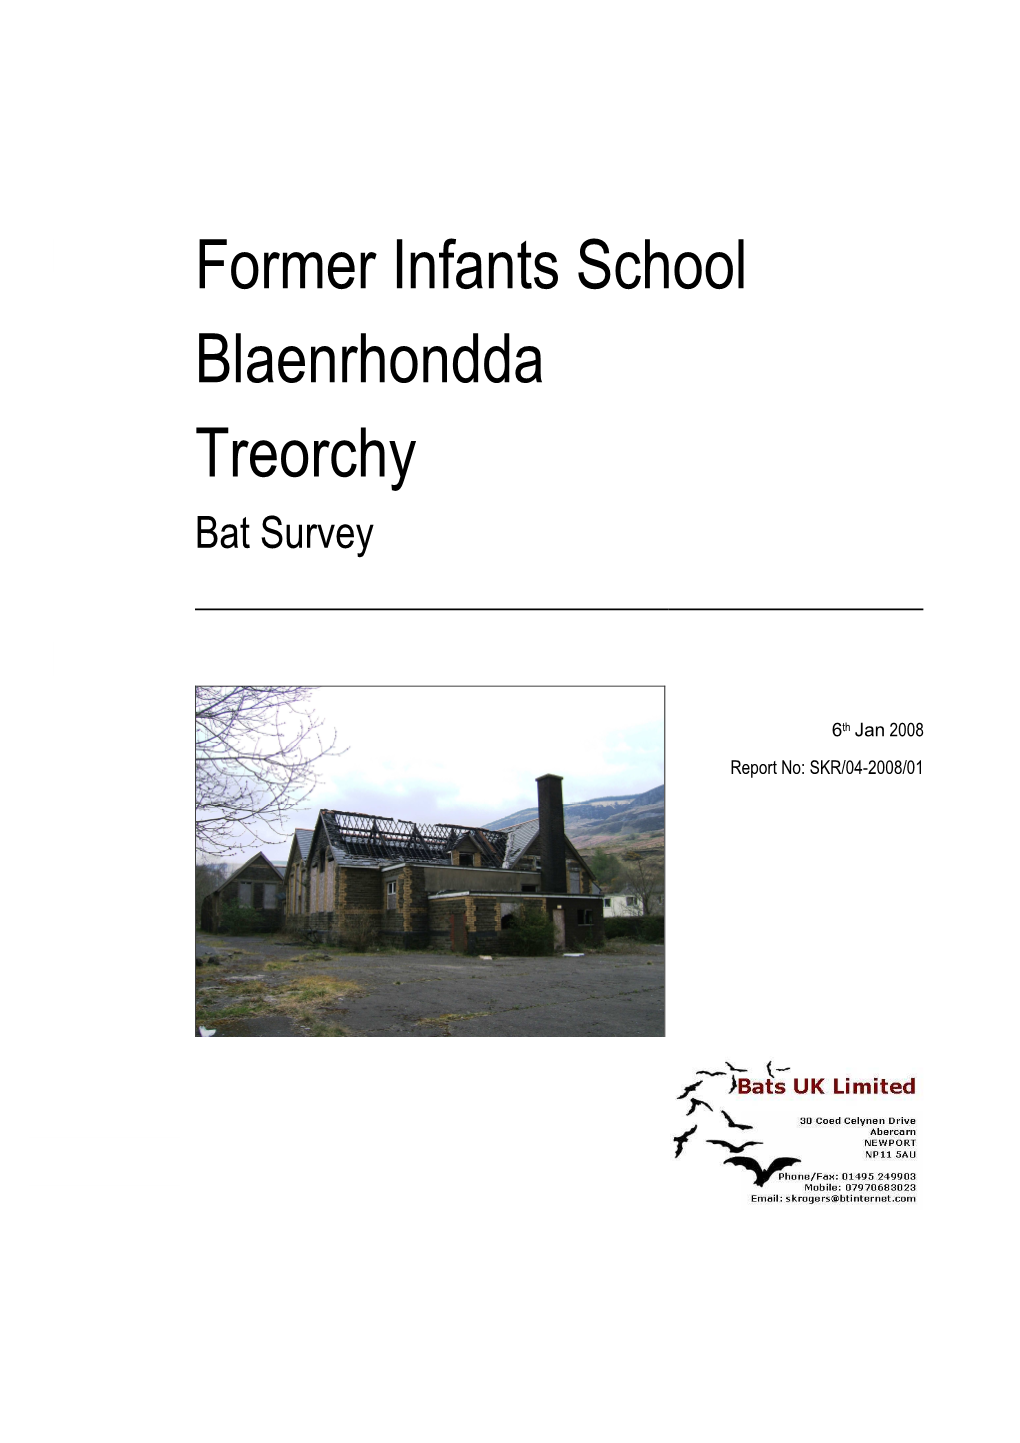 Former Infants School Blaenrhondda Treorchy Bat Survey